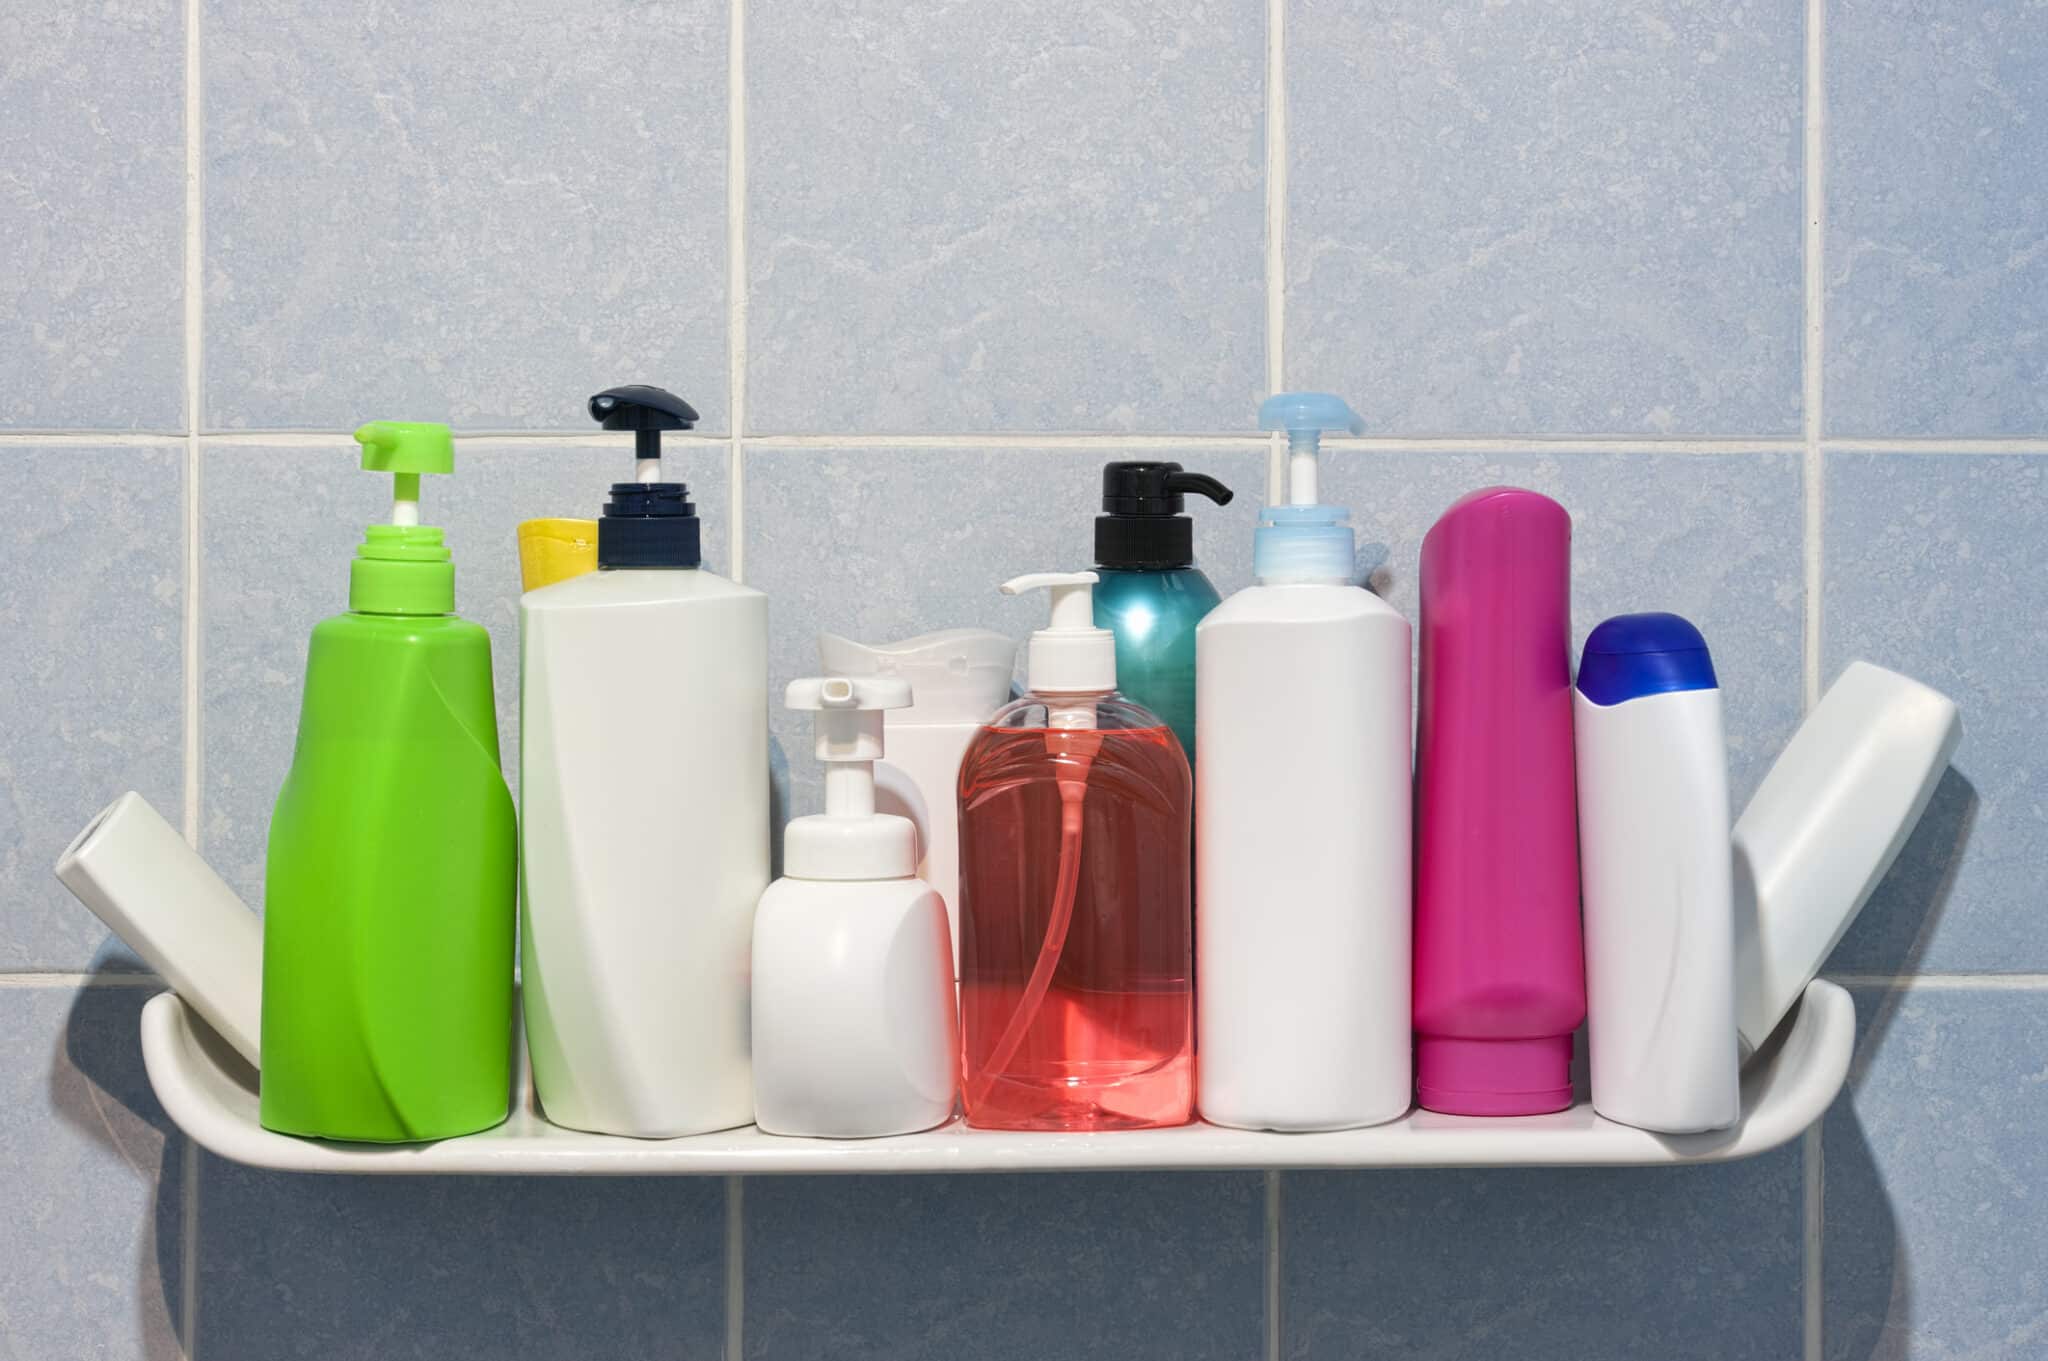 Many shampoo and soap bottles on a bathroom or shower shelf.